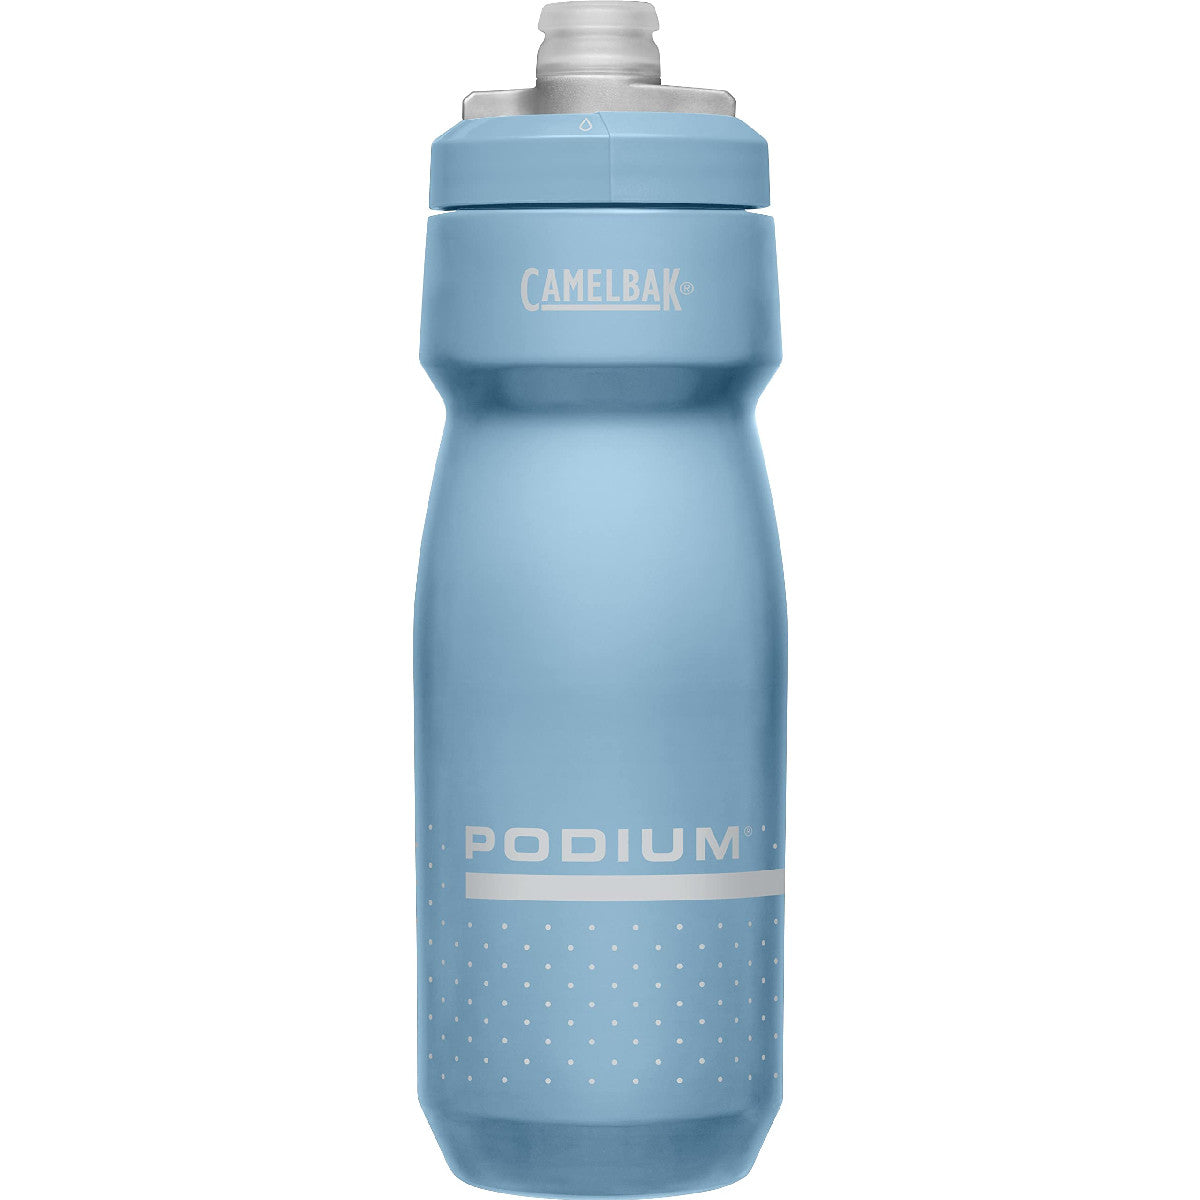 CamelBak Podium Water Bottle Stone Blue 24oz Water Bottles & Hydration Packs